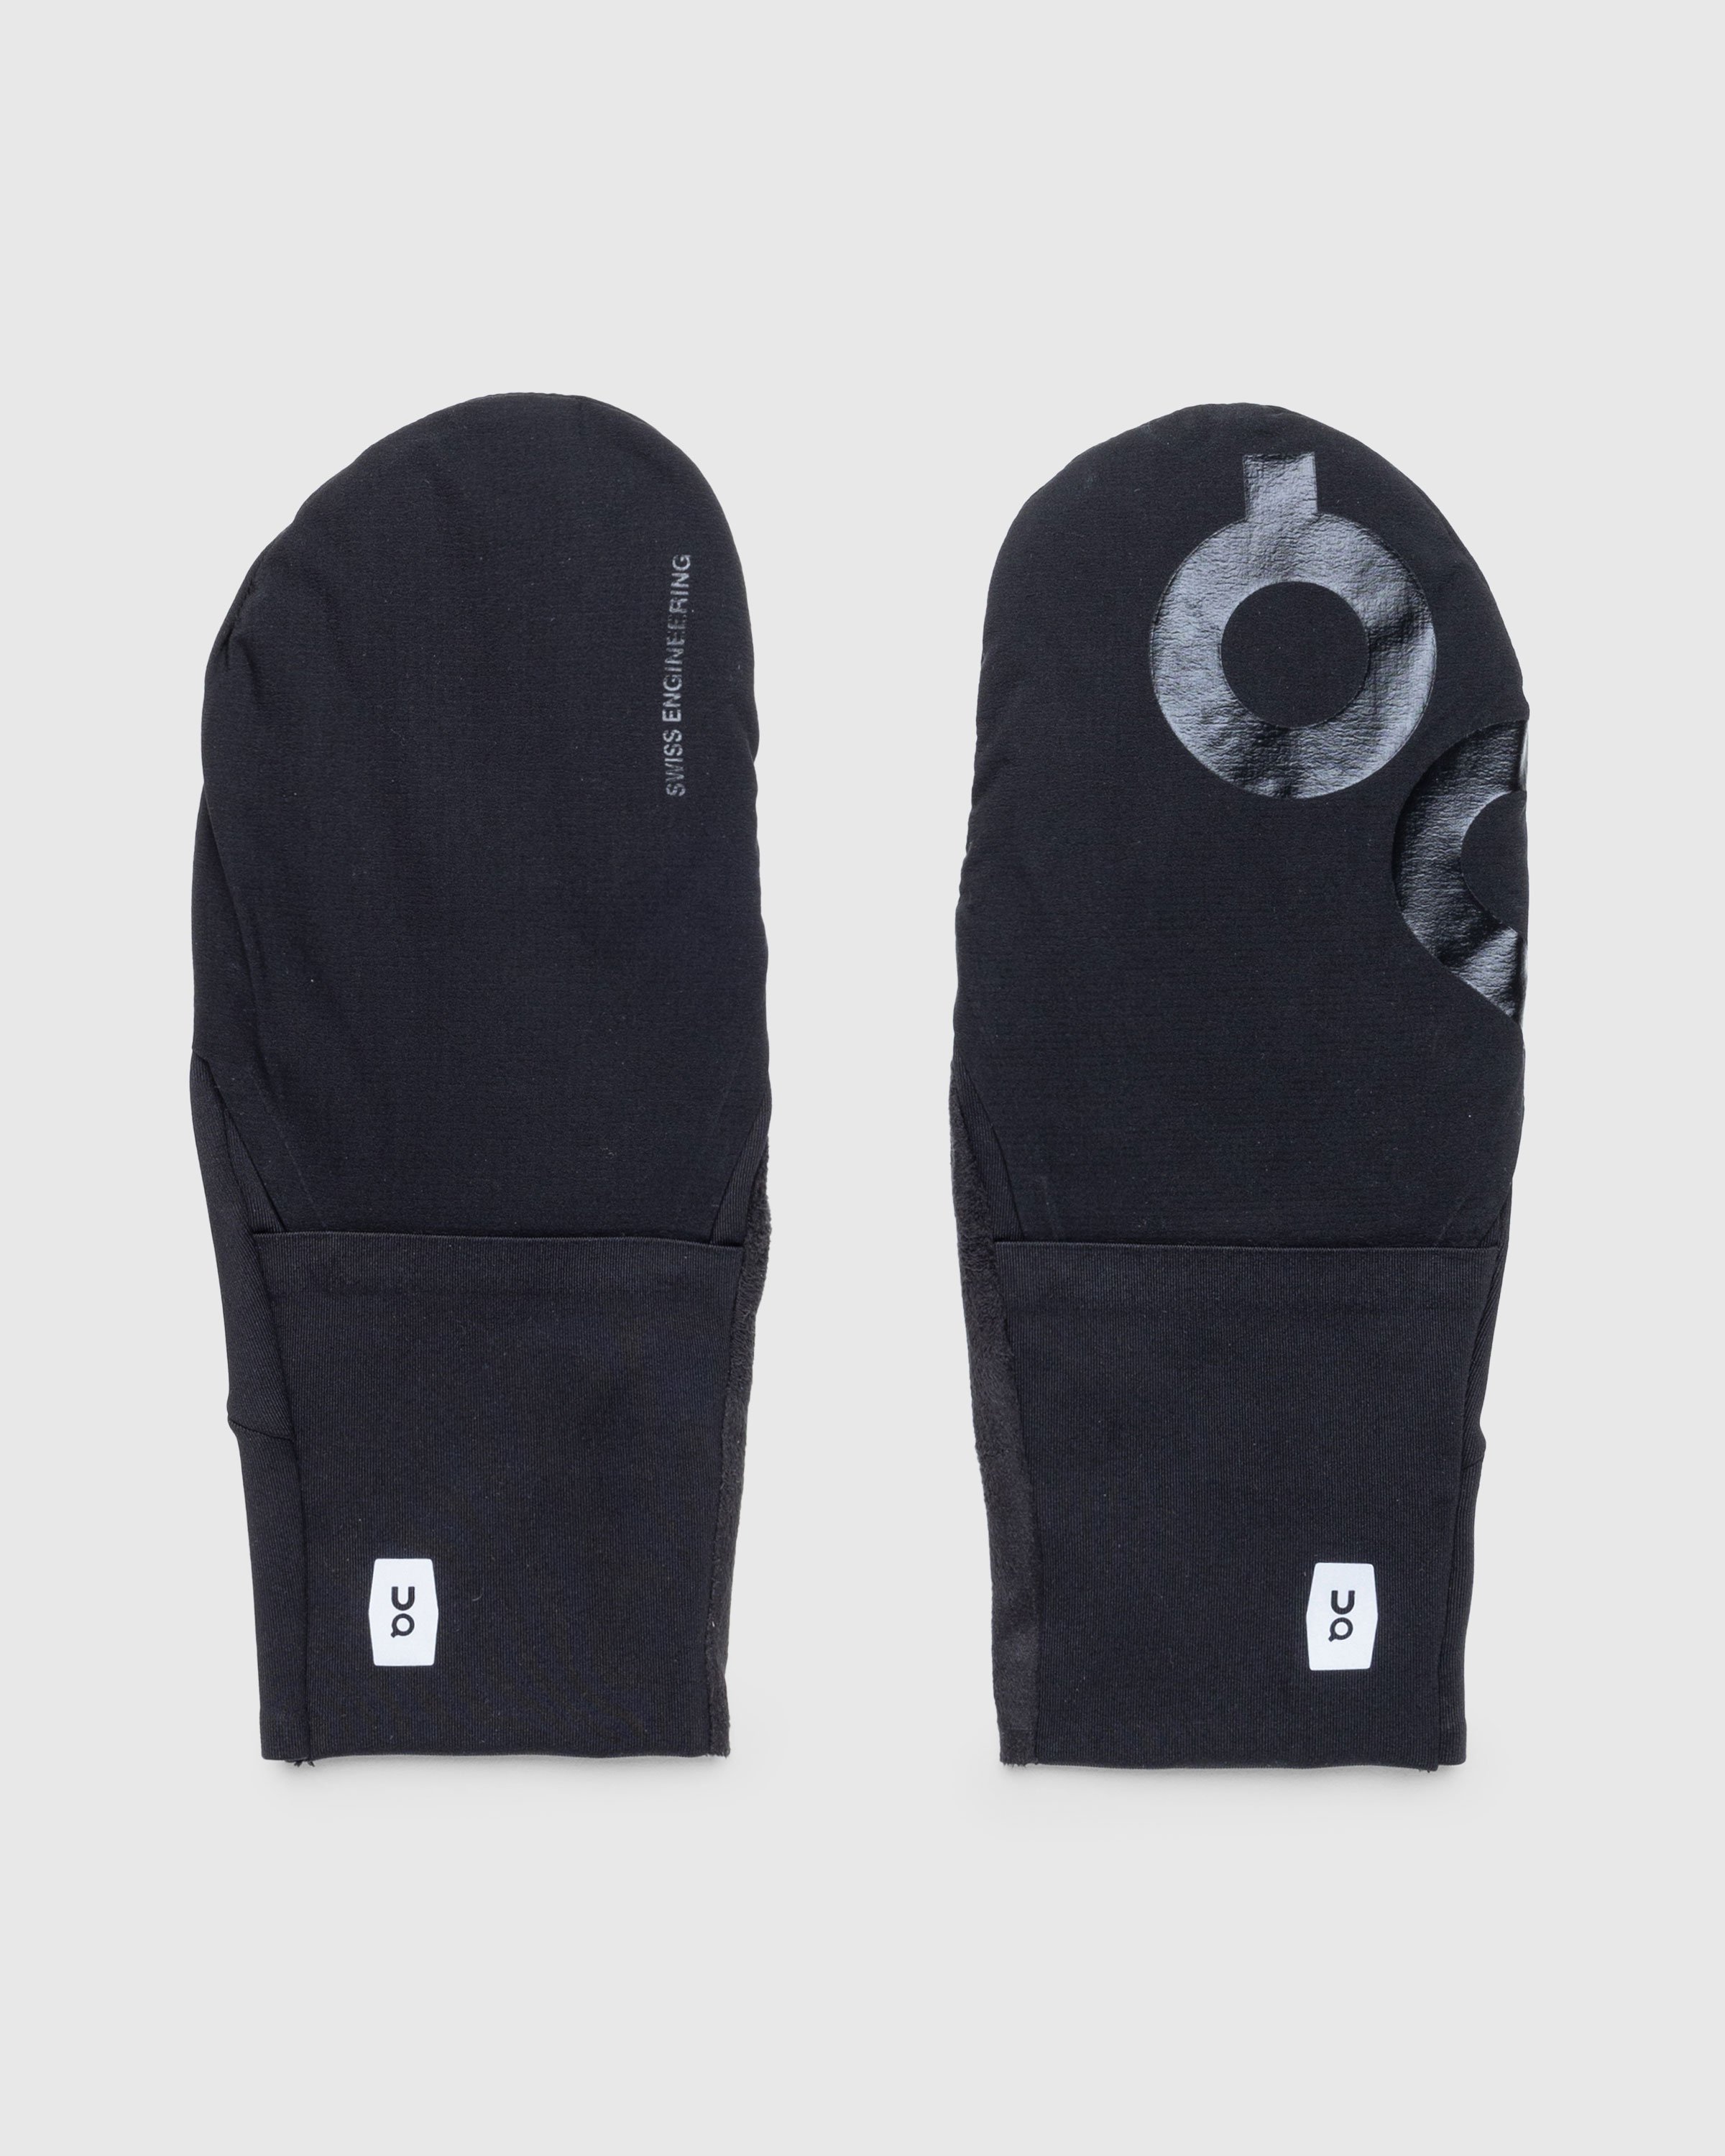 On - Weather Glove Black - Accessories - Black - Image 2